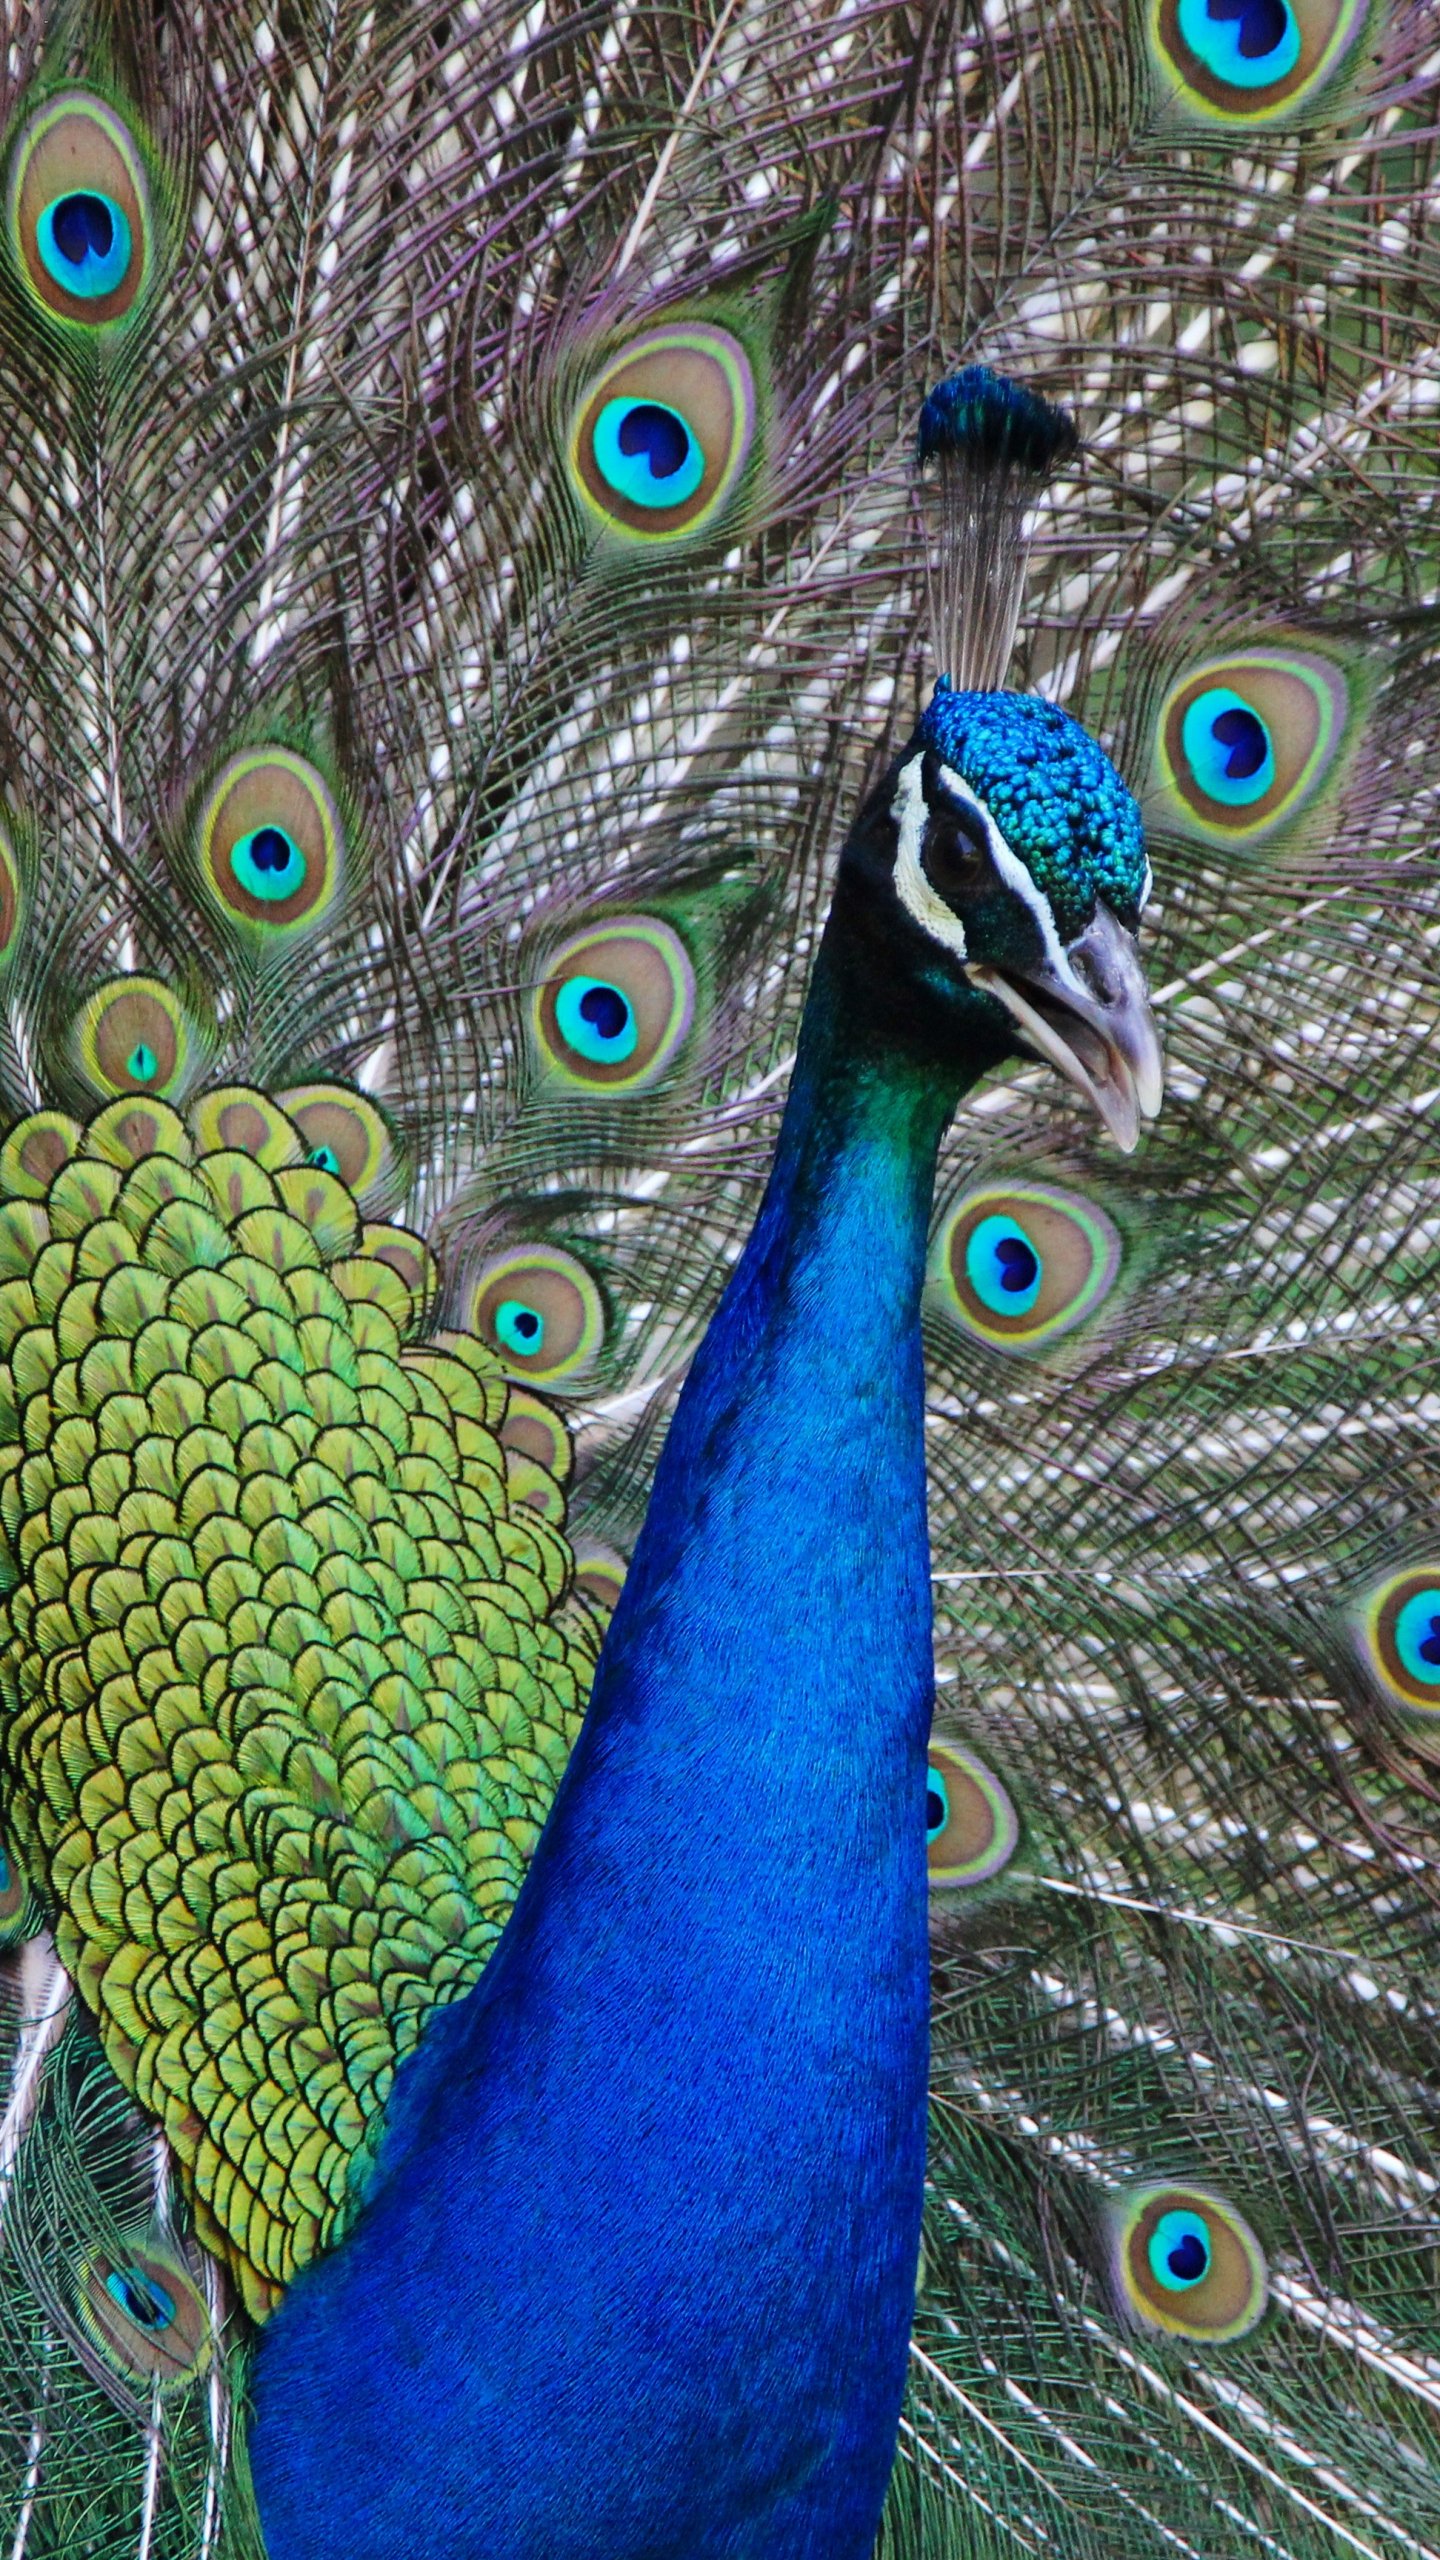 Peacock Wallpaper - iPhone, Android & Desktop Backgrounds